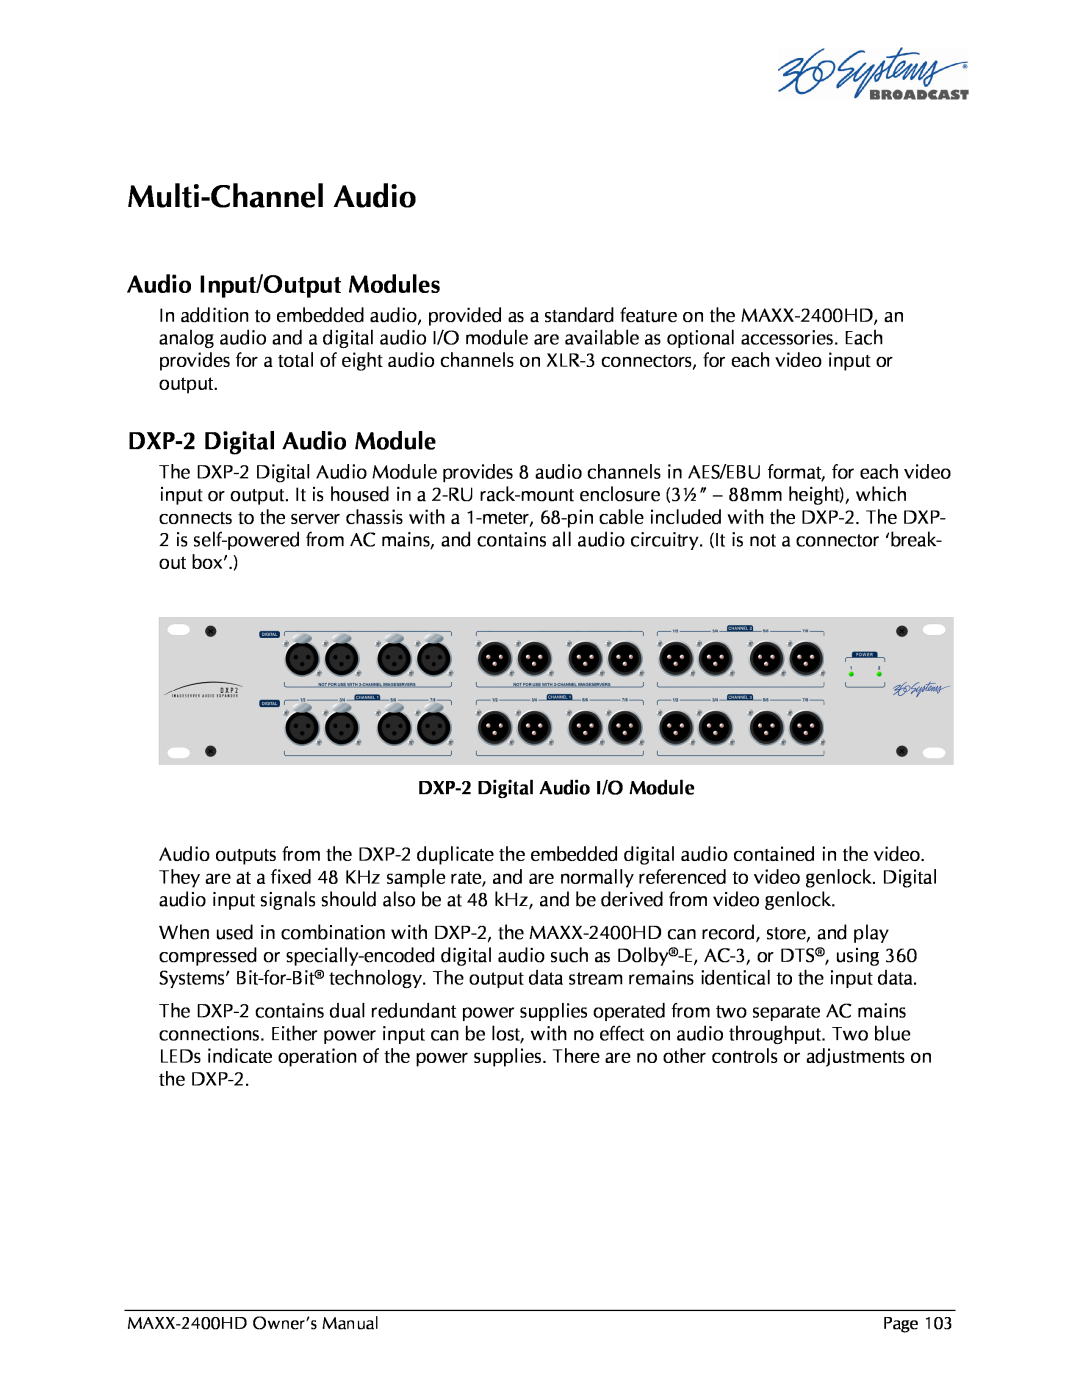 Maxxsonics MAXX-2400HD manual Multi-ChannelAudio, Audio Input/Output Modules, DXP-2Digital Audio Module 